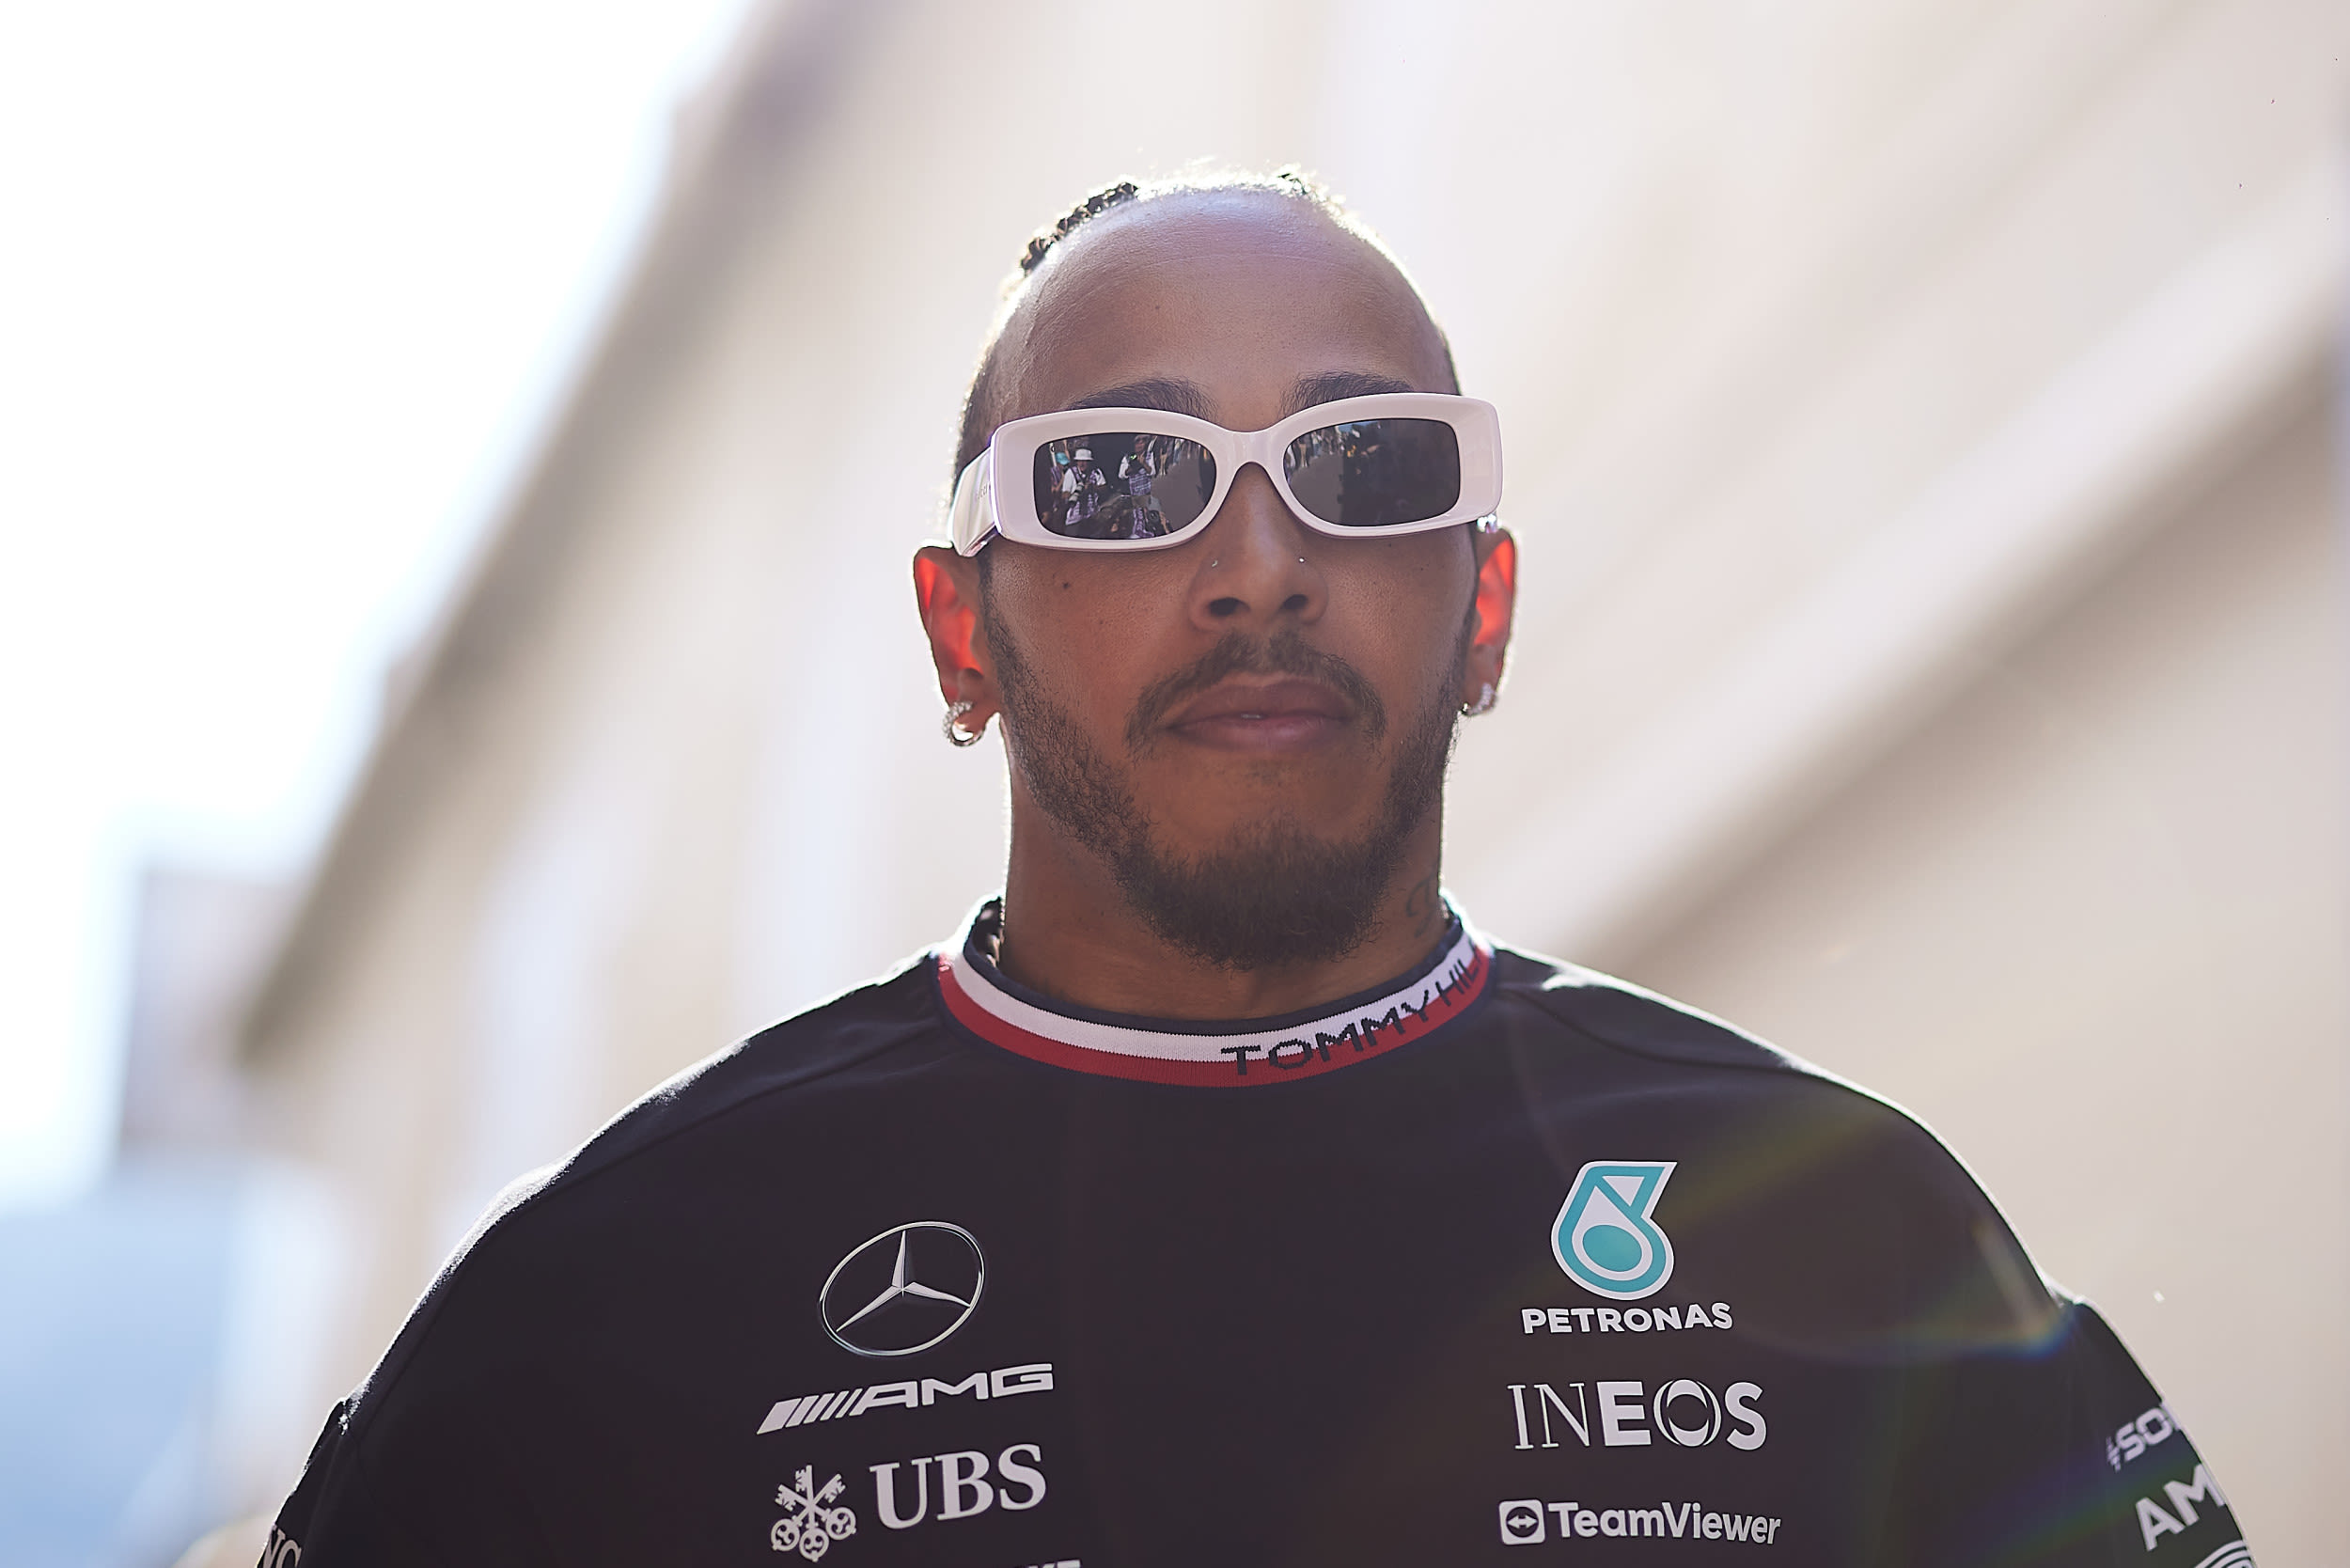 Pirelli responds to Lewis Hamilton tire complaints